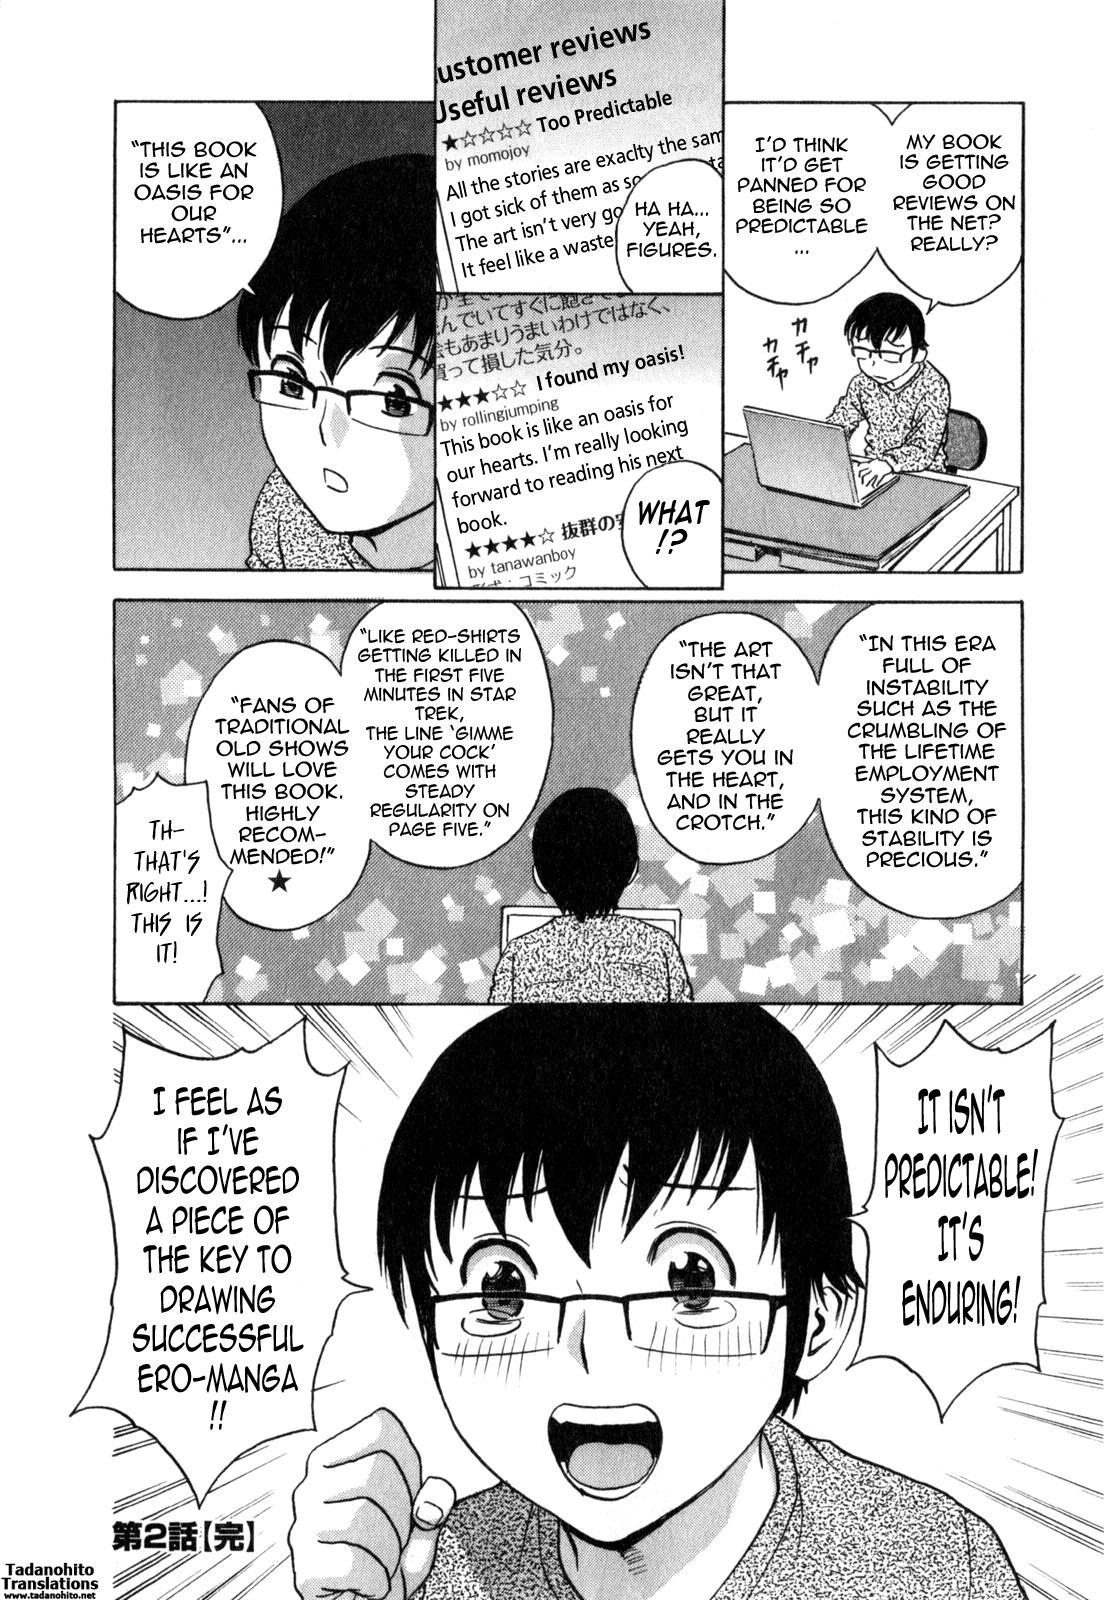 [Hidemaru] Life with Married Women Just Like a Manga 3 - Ch. 1-8 [English] {Tadanohito} 44